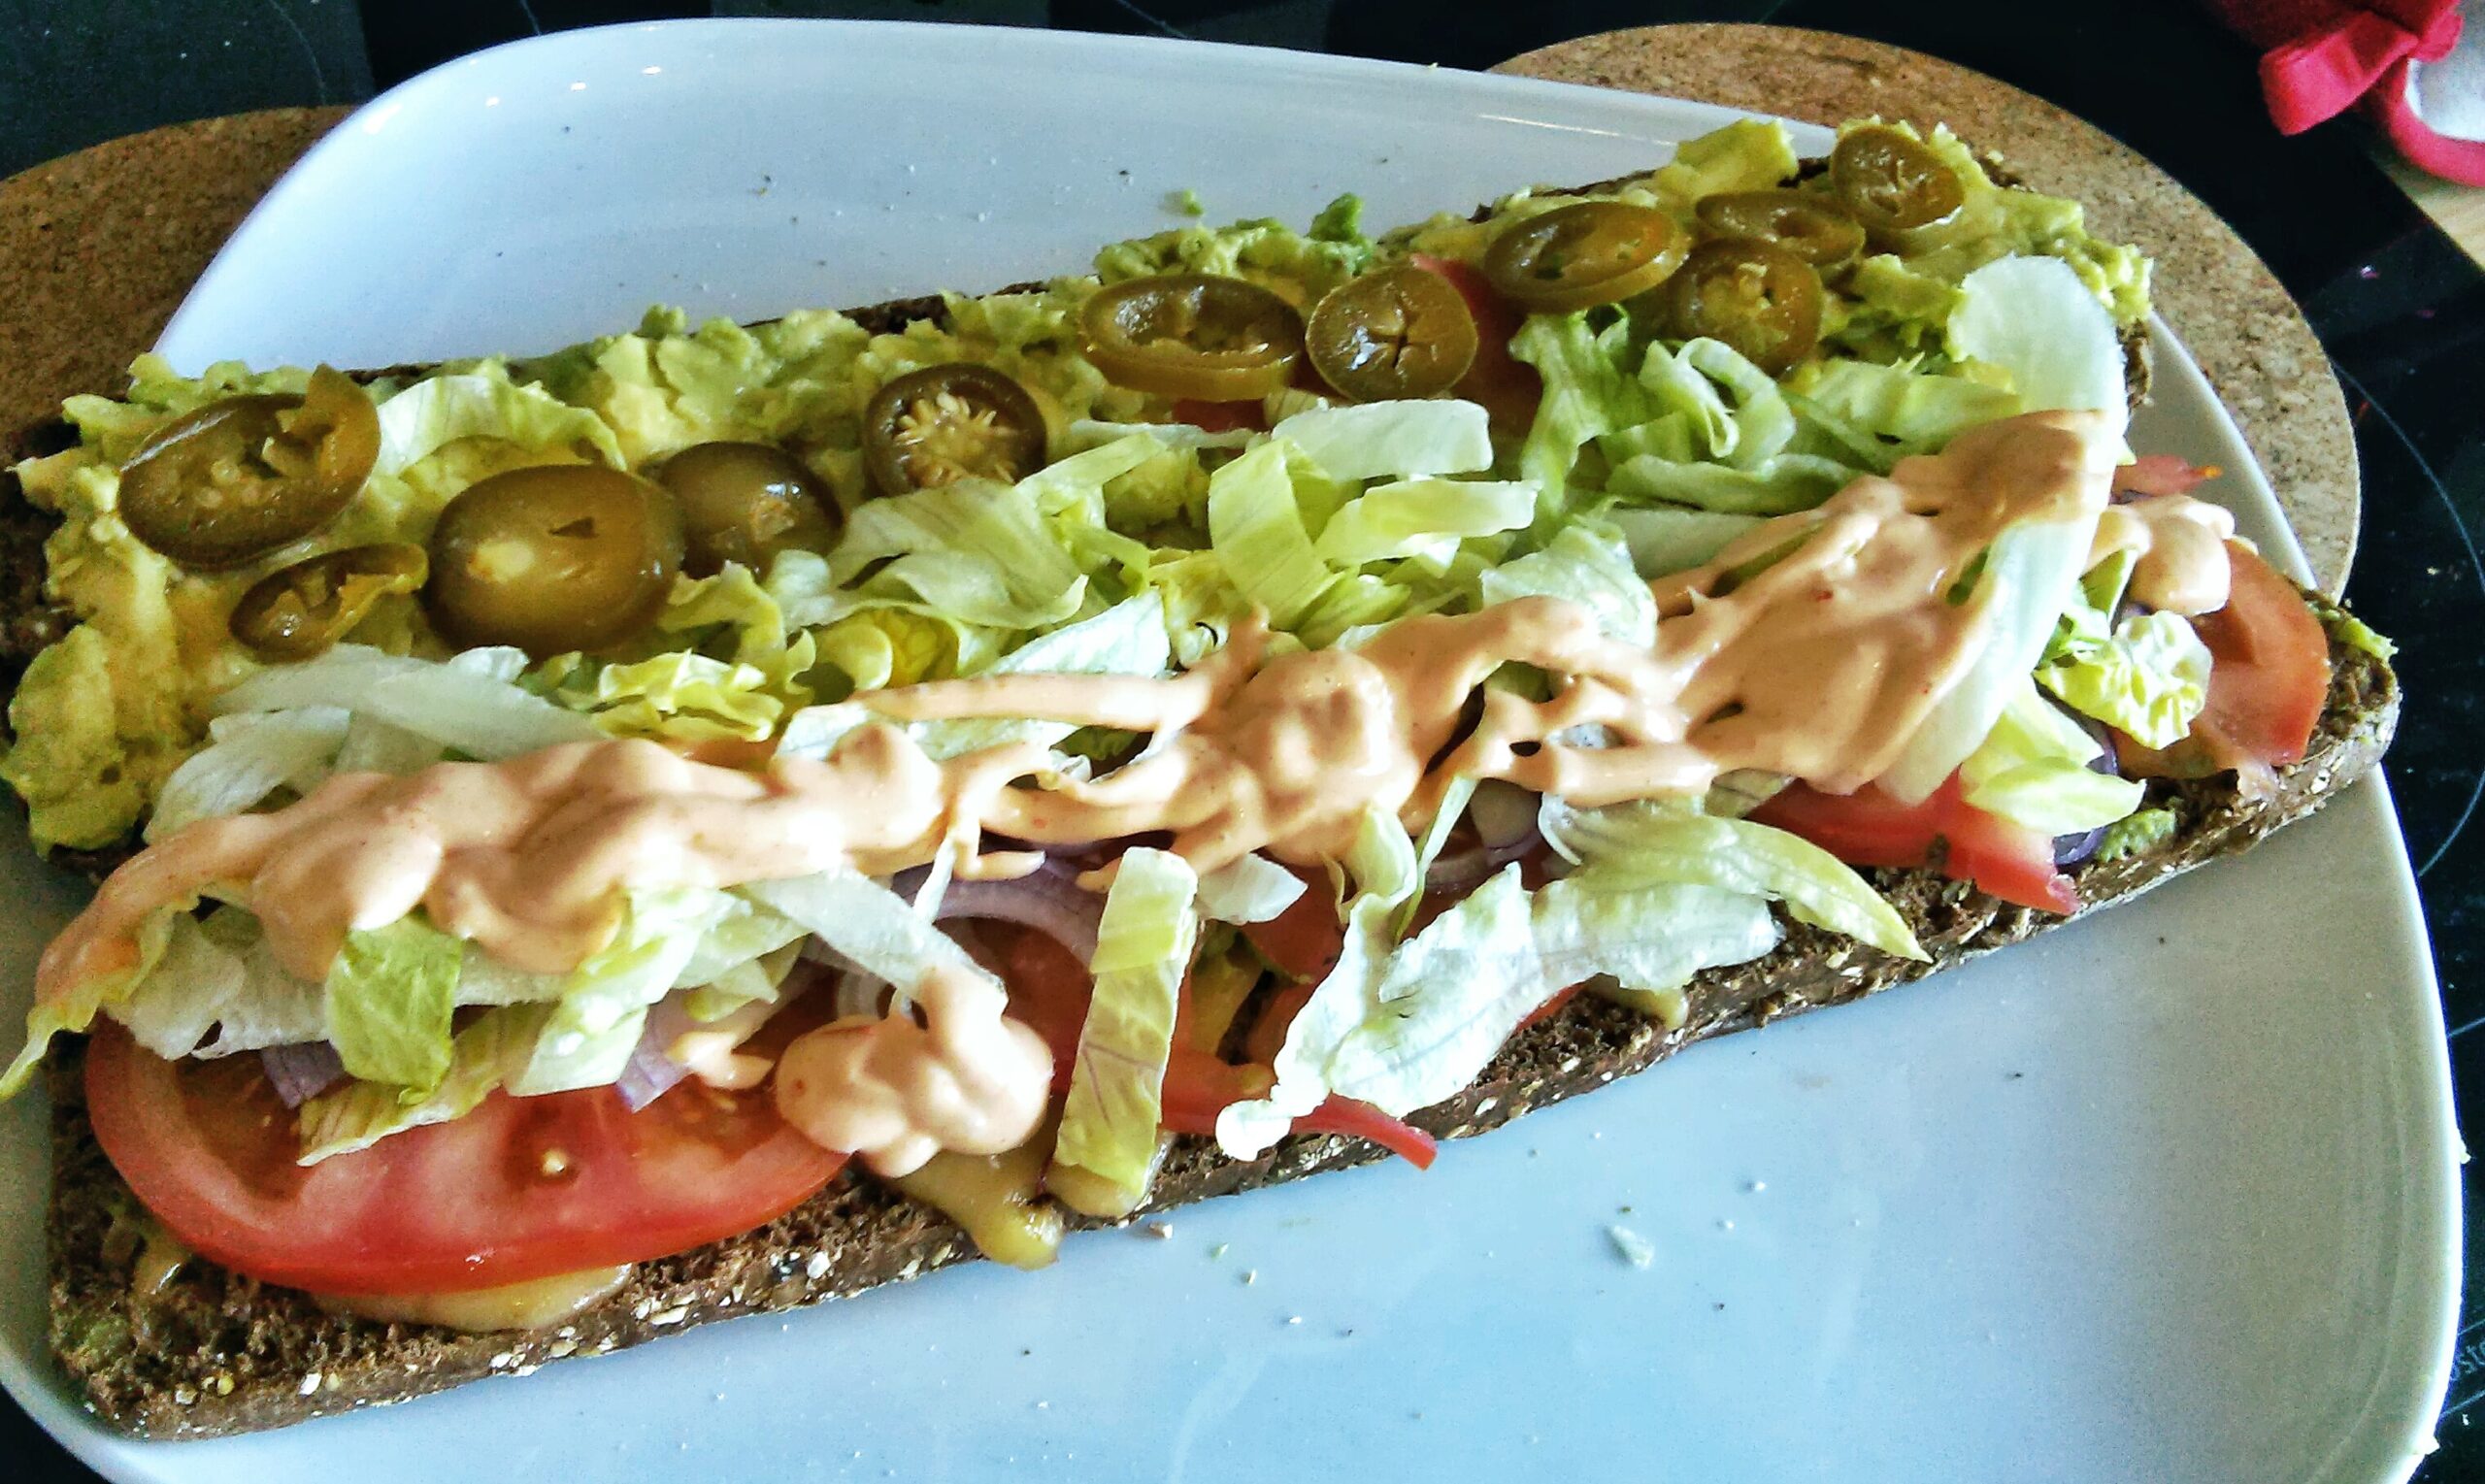 American Subway style sandwich